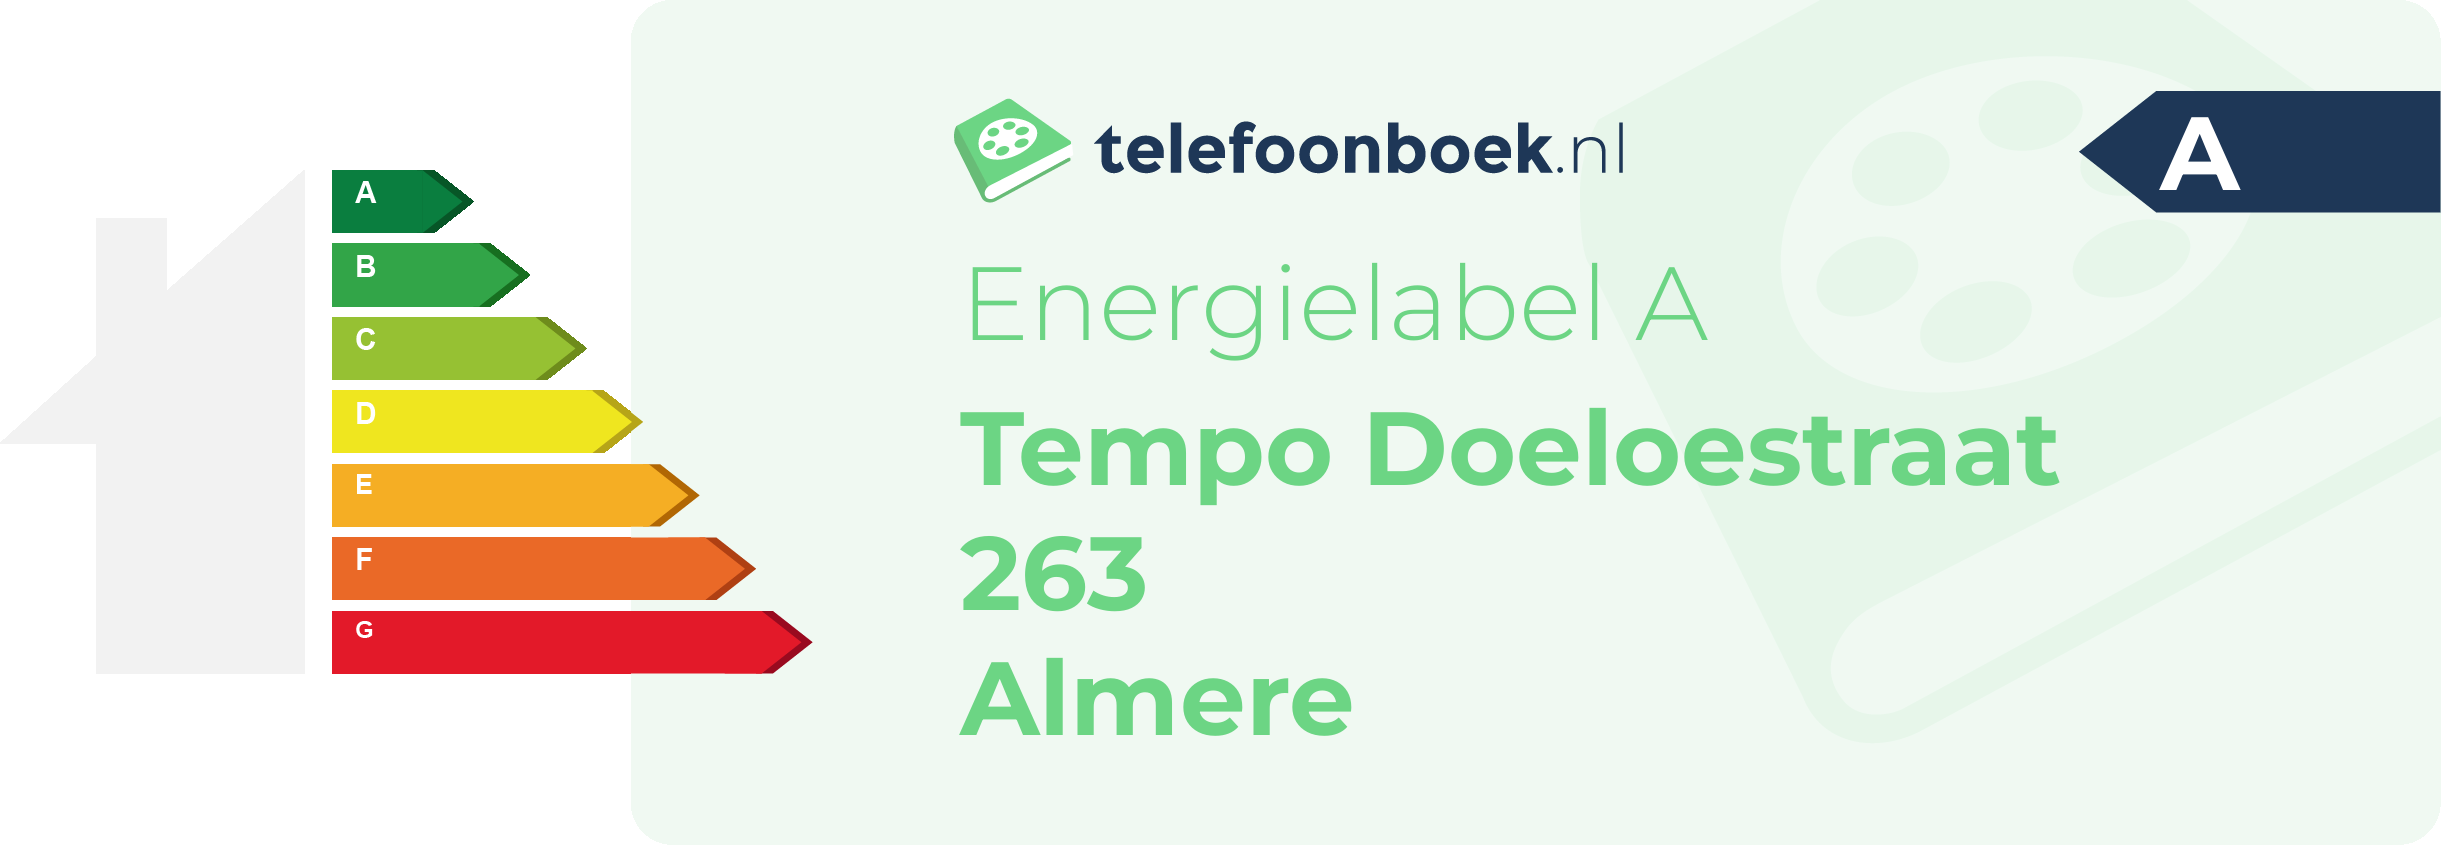 Energielabel Tempo Doeloestraat 263 Almere